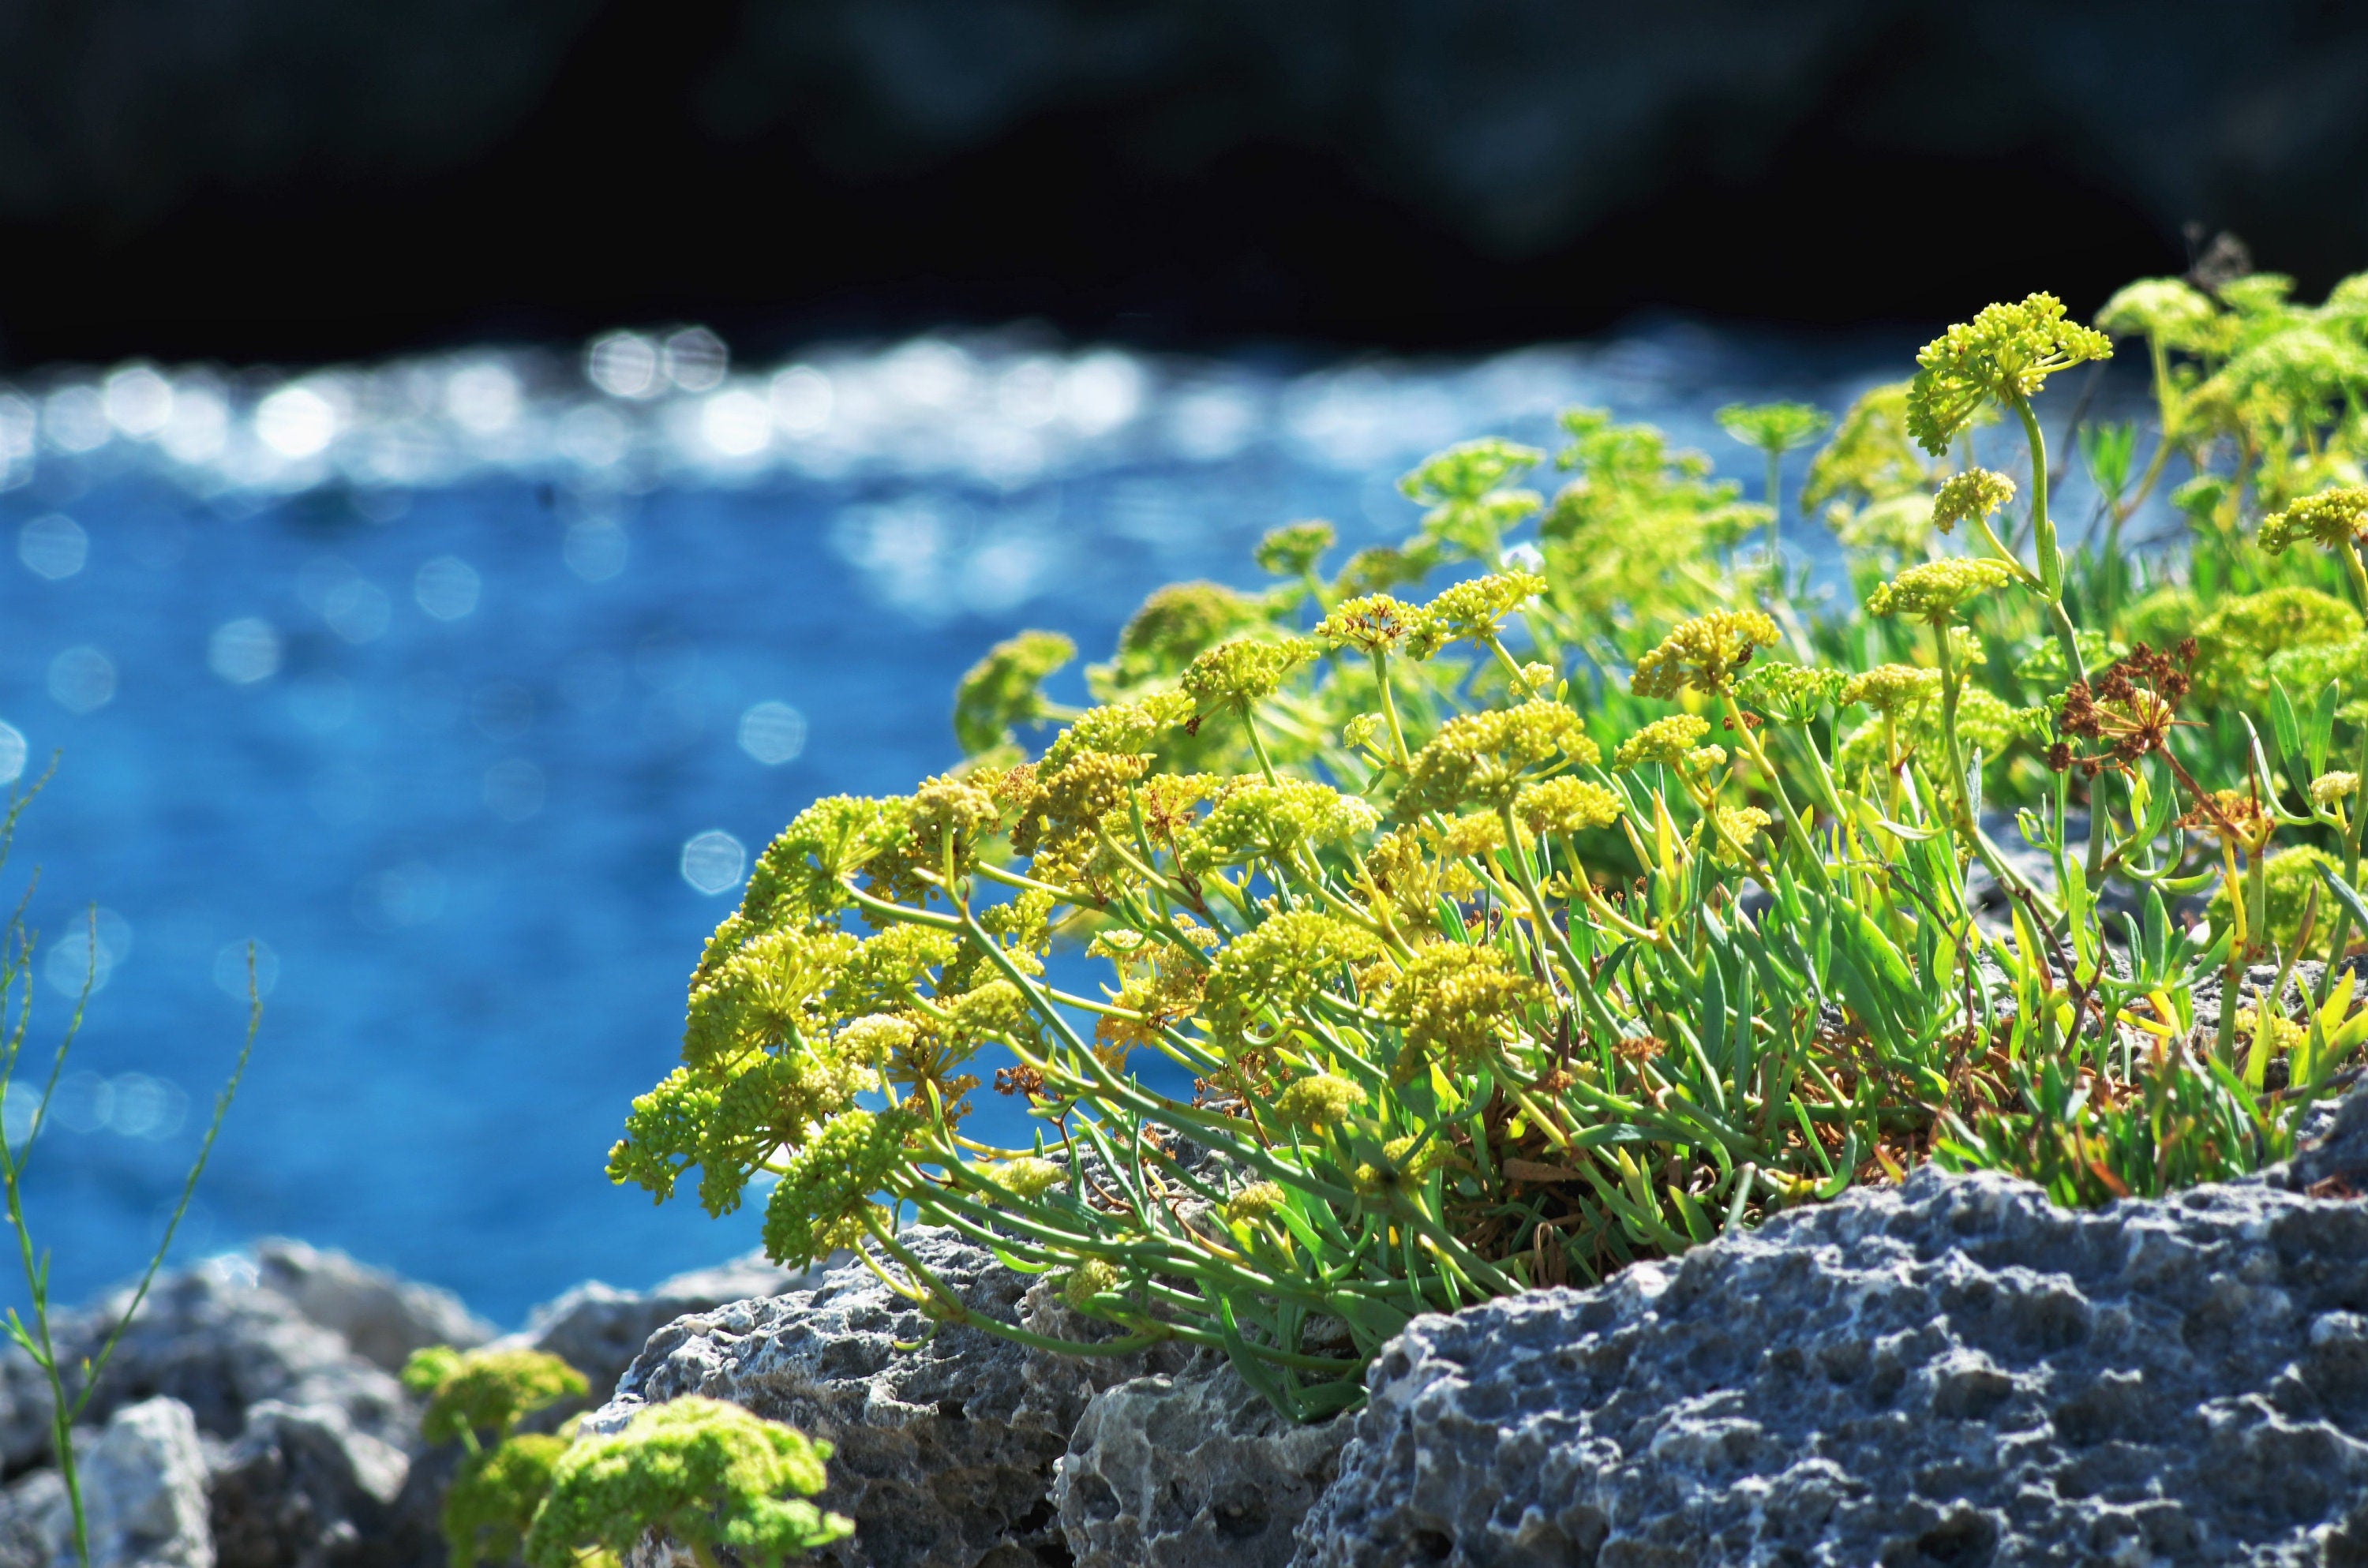 40 SEA FENNEL Rock Samphire Crithmum Maritimum Fragrant Herb Edible Vegetable Yellow Flower Seeds - image 2 of 10